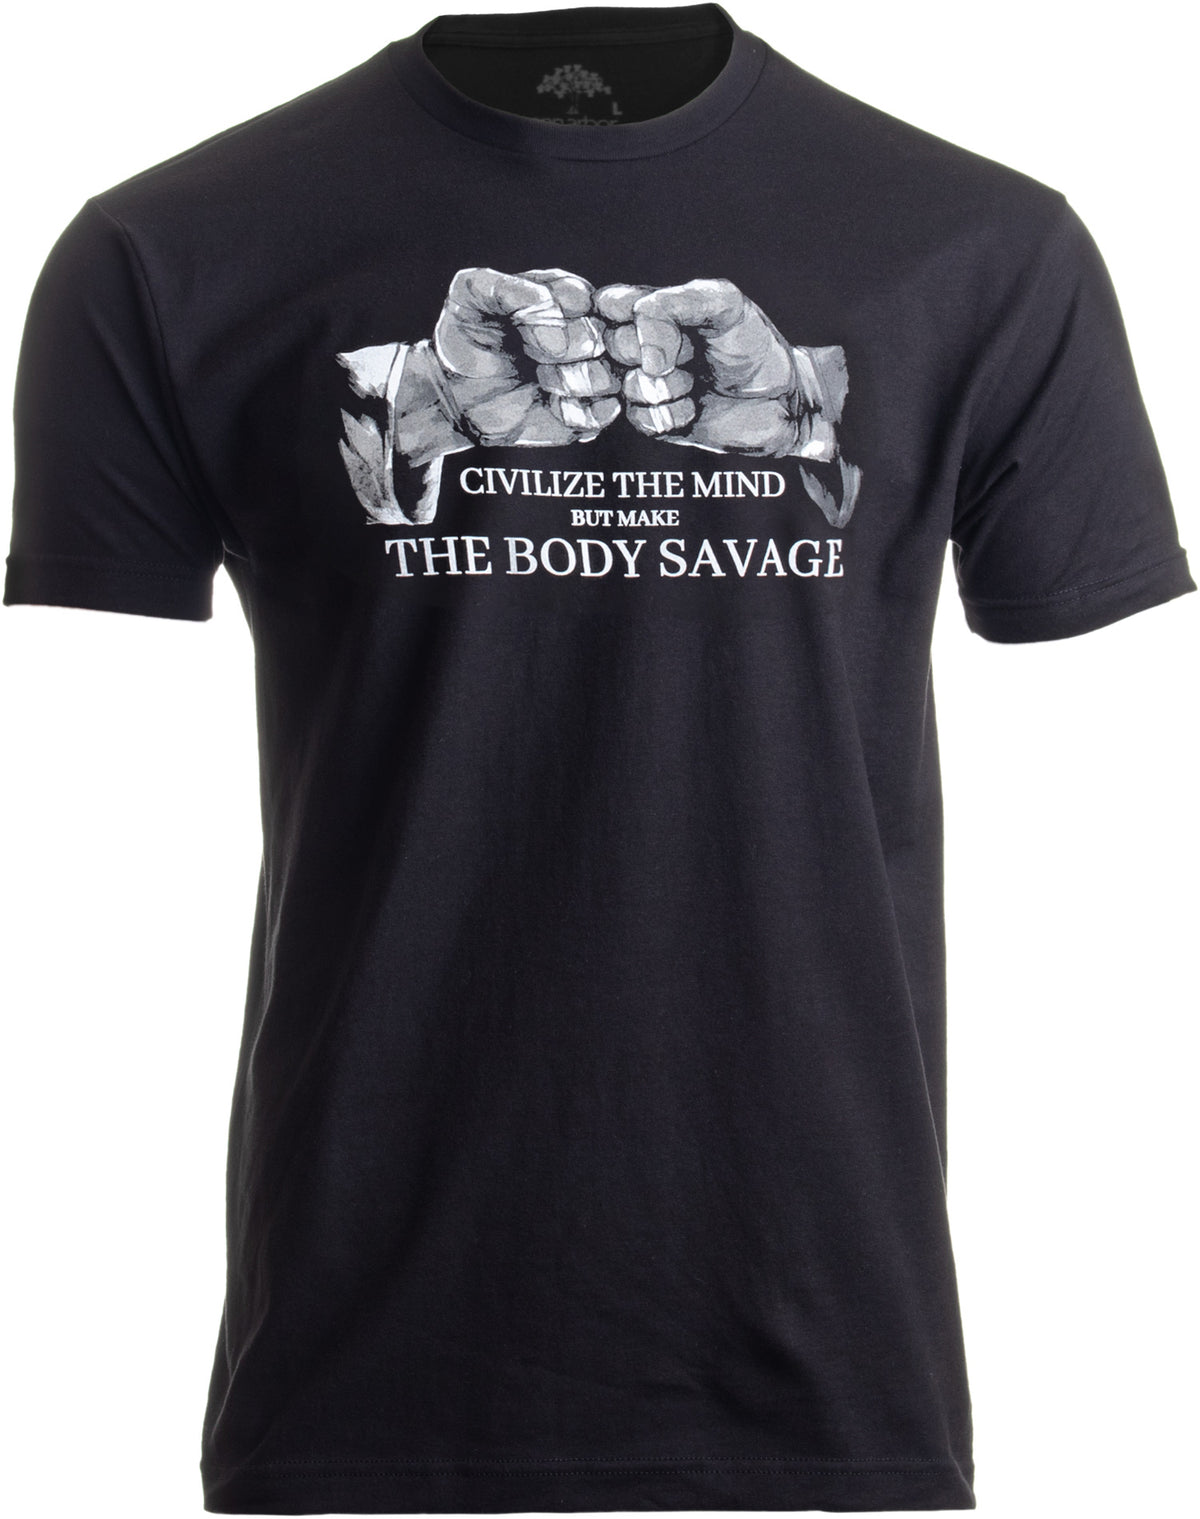 Civilize the Mind, Make the Body Savage | BJJ Brazilian Jiu Jitsu Judo T-shirt